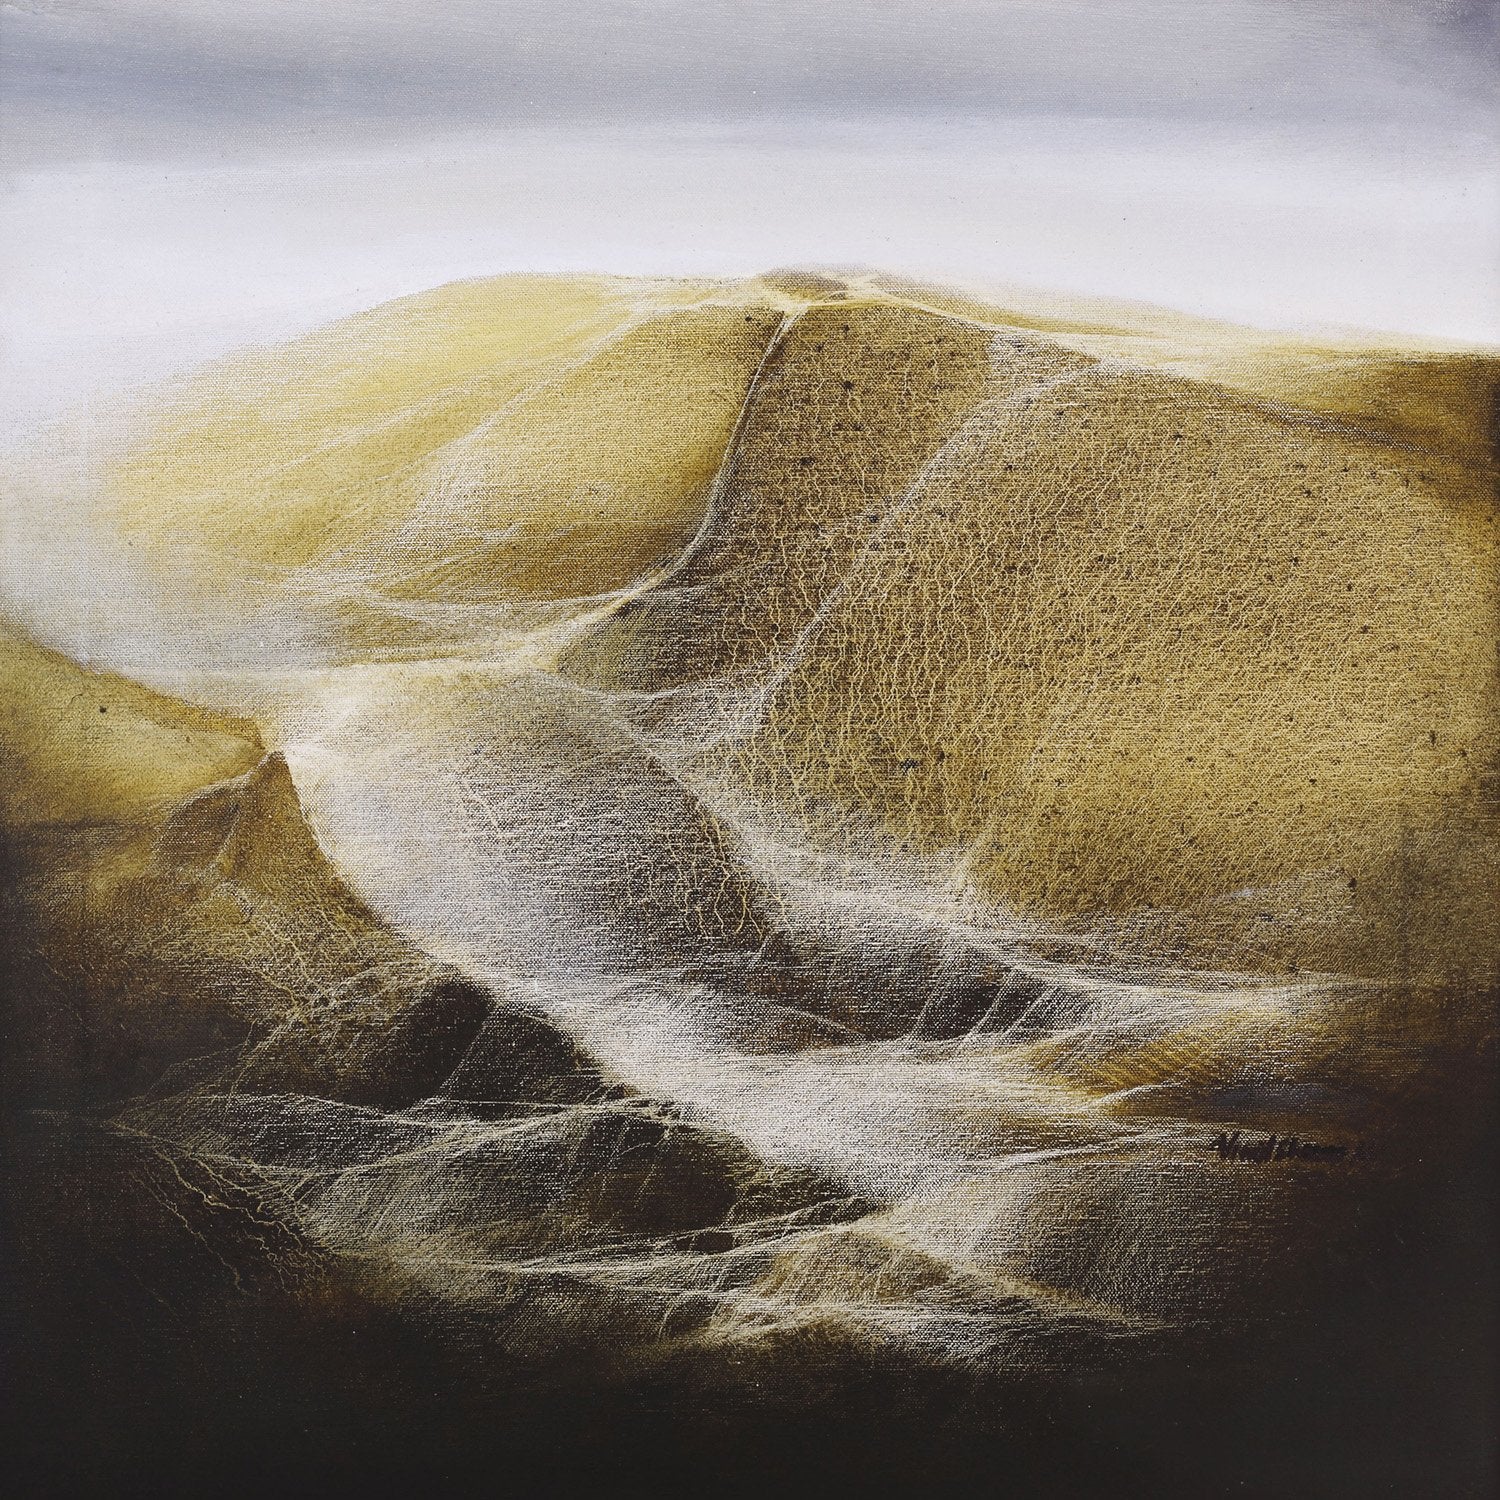 Rockspace 1|Vinod Sharma- Oil on Canvas, 2014, 24 x 24 inches